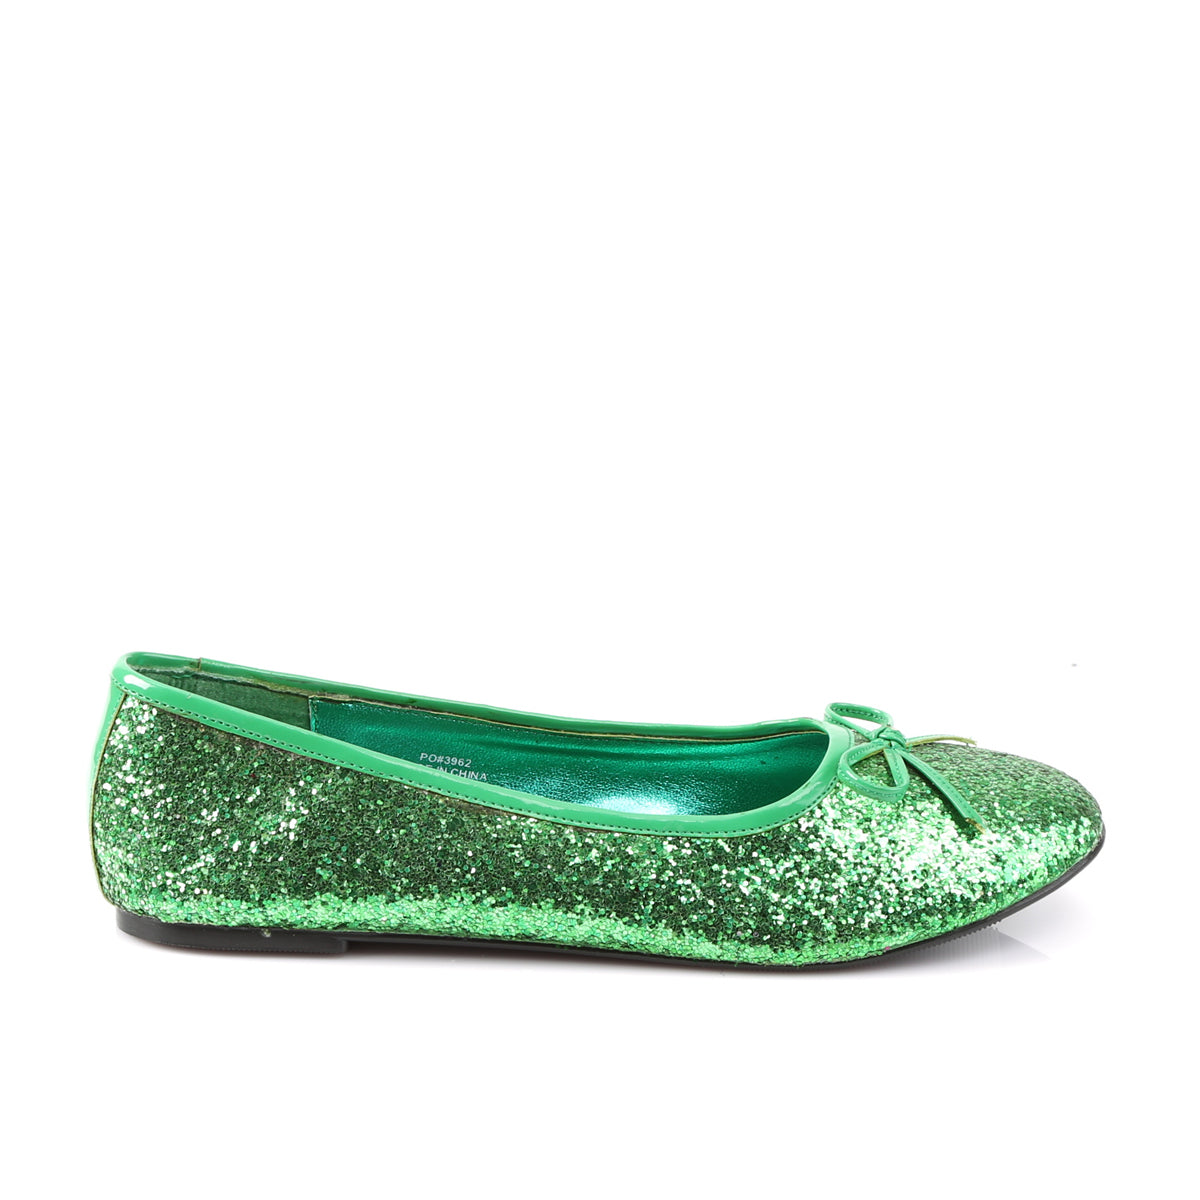 STAR-16G Funtasma Fantasy Green Gltr Women's Shoes [Fancy Dress Costume Shoes]